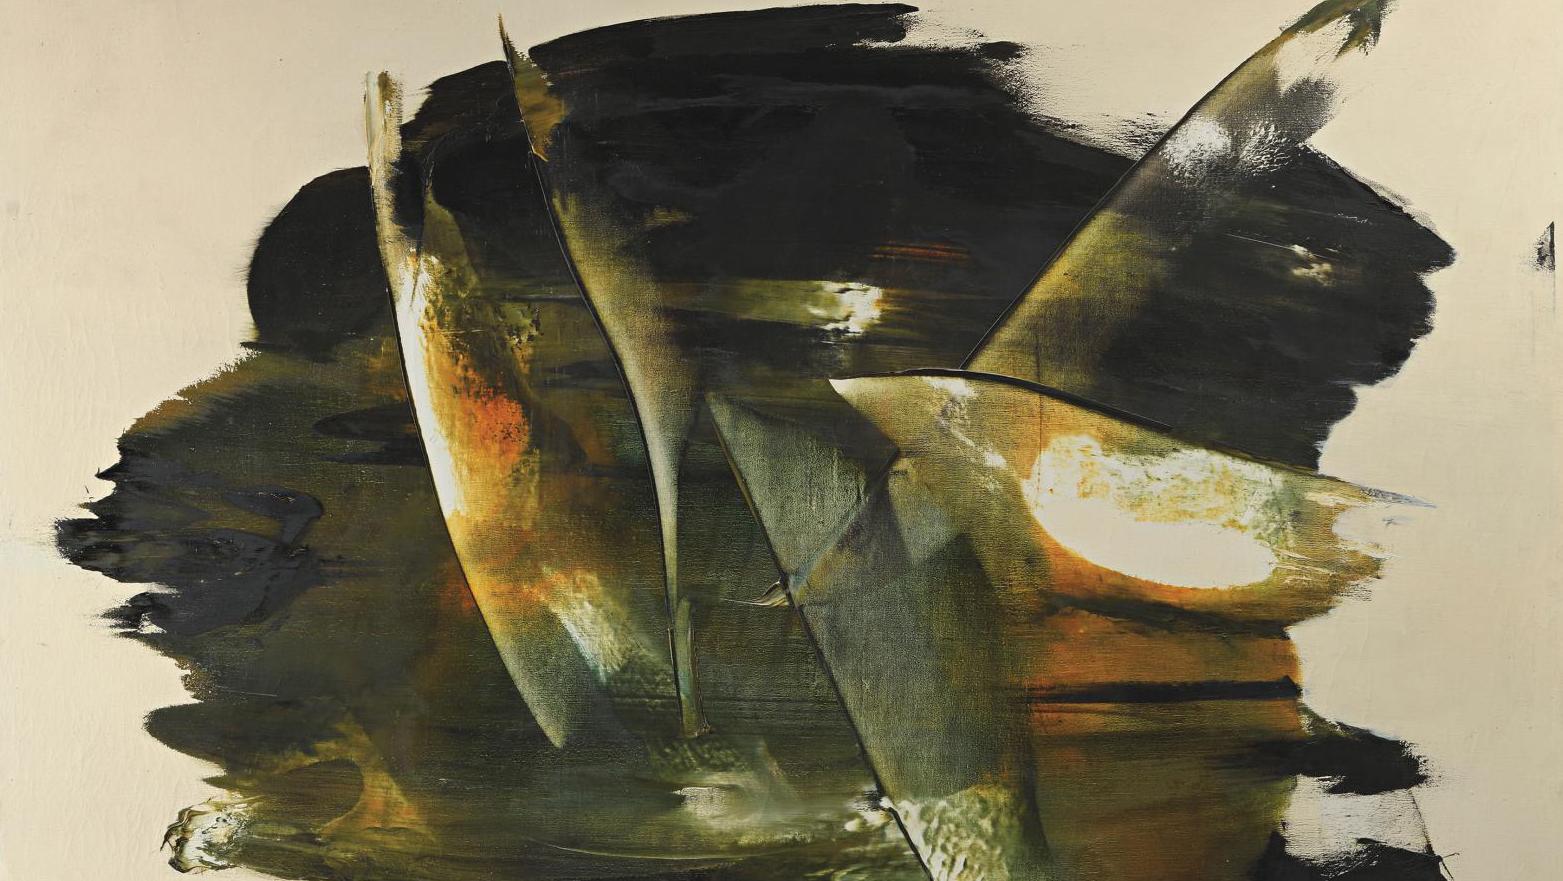 Judit Reigl (1923-2020), Harmonisation, 1961, oil on canvas, 127 x 145 cm/50 x 57... Judit Reigl: Abstraction's Grande Dame